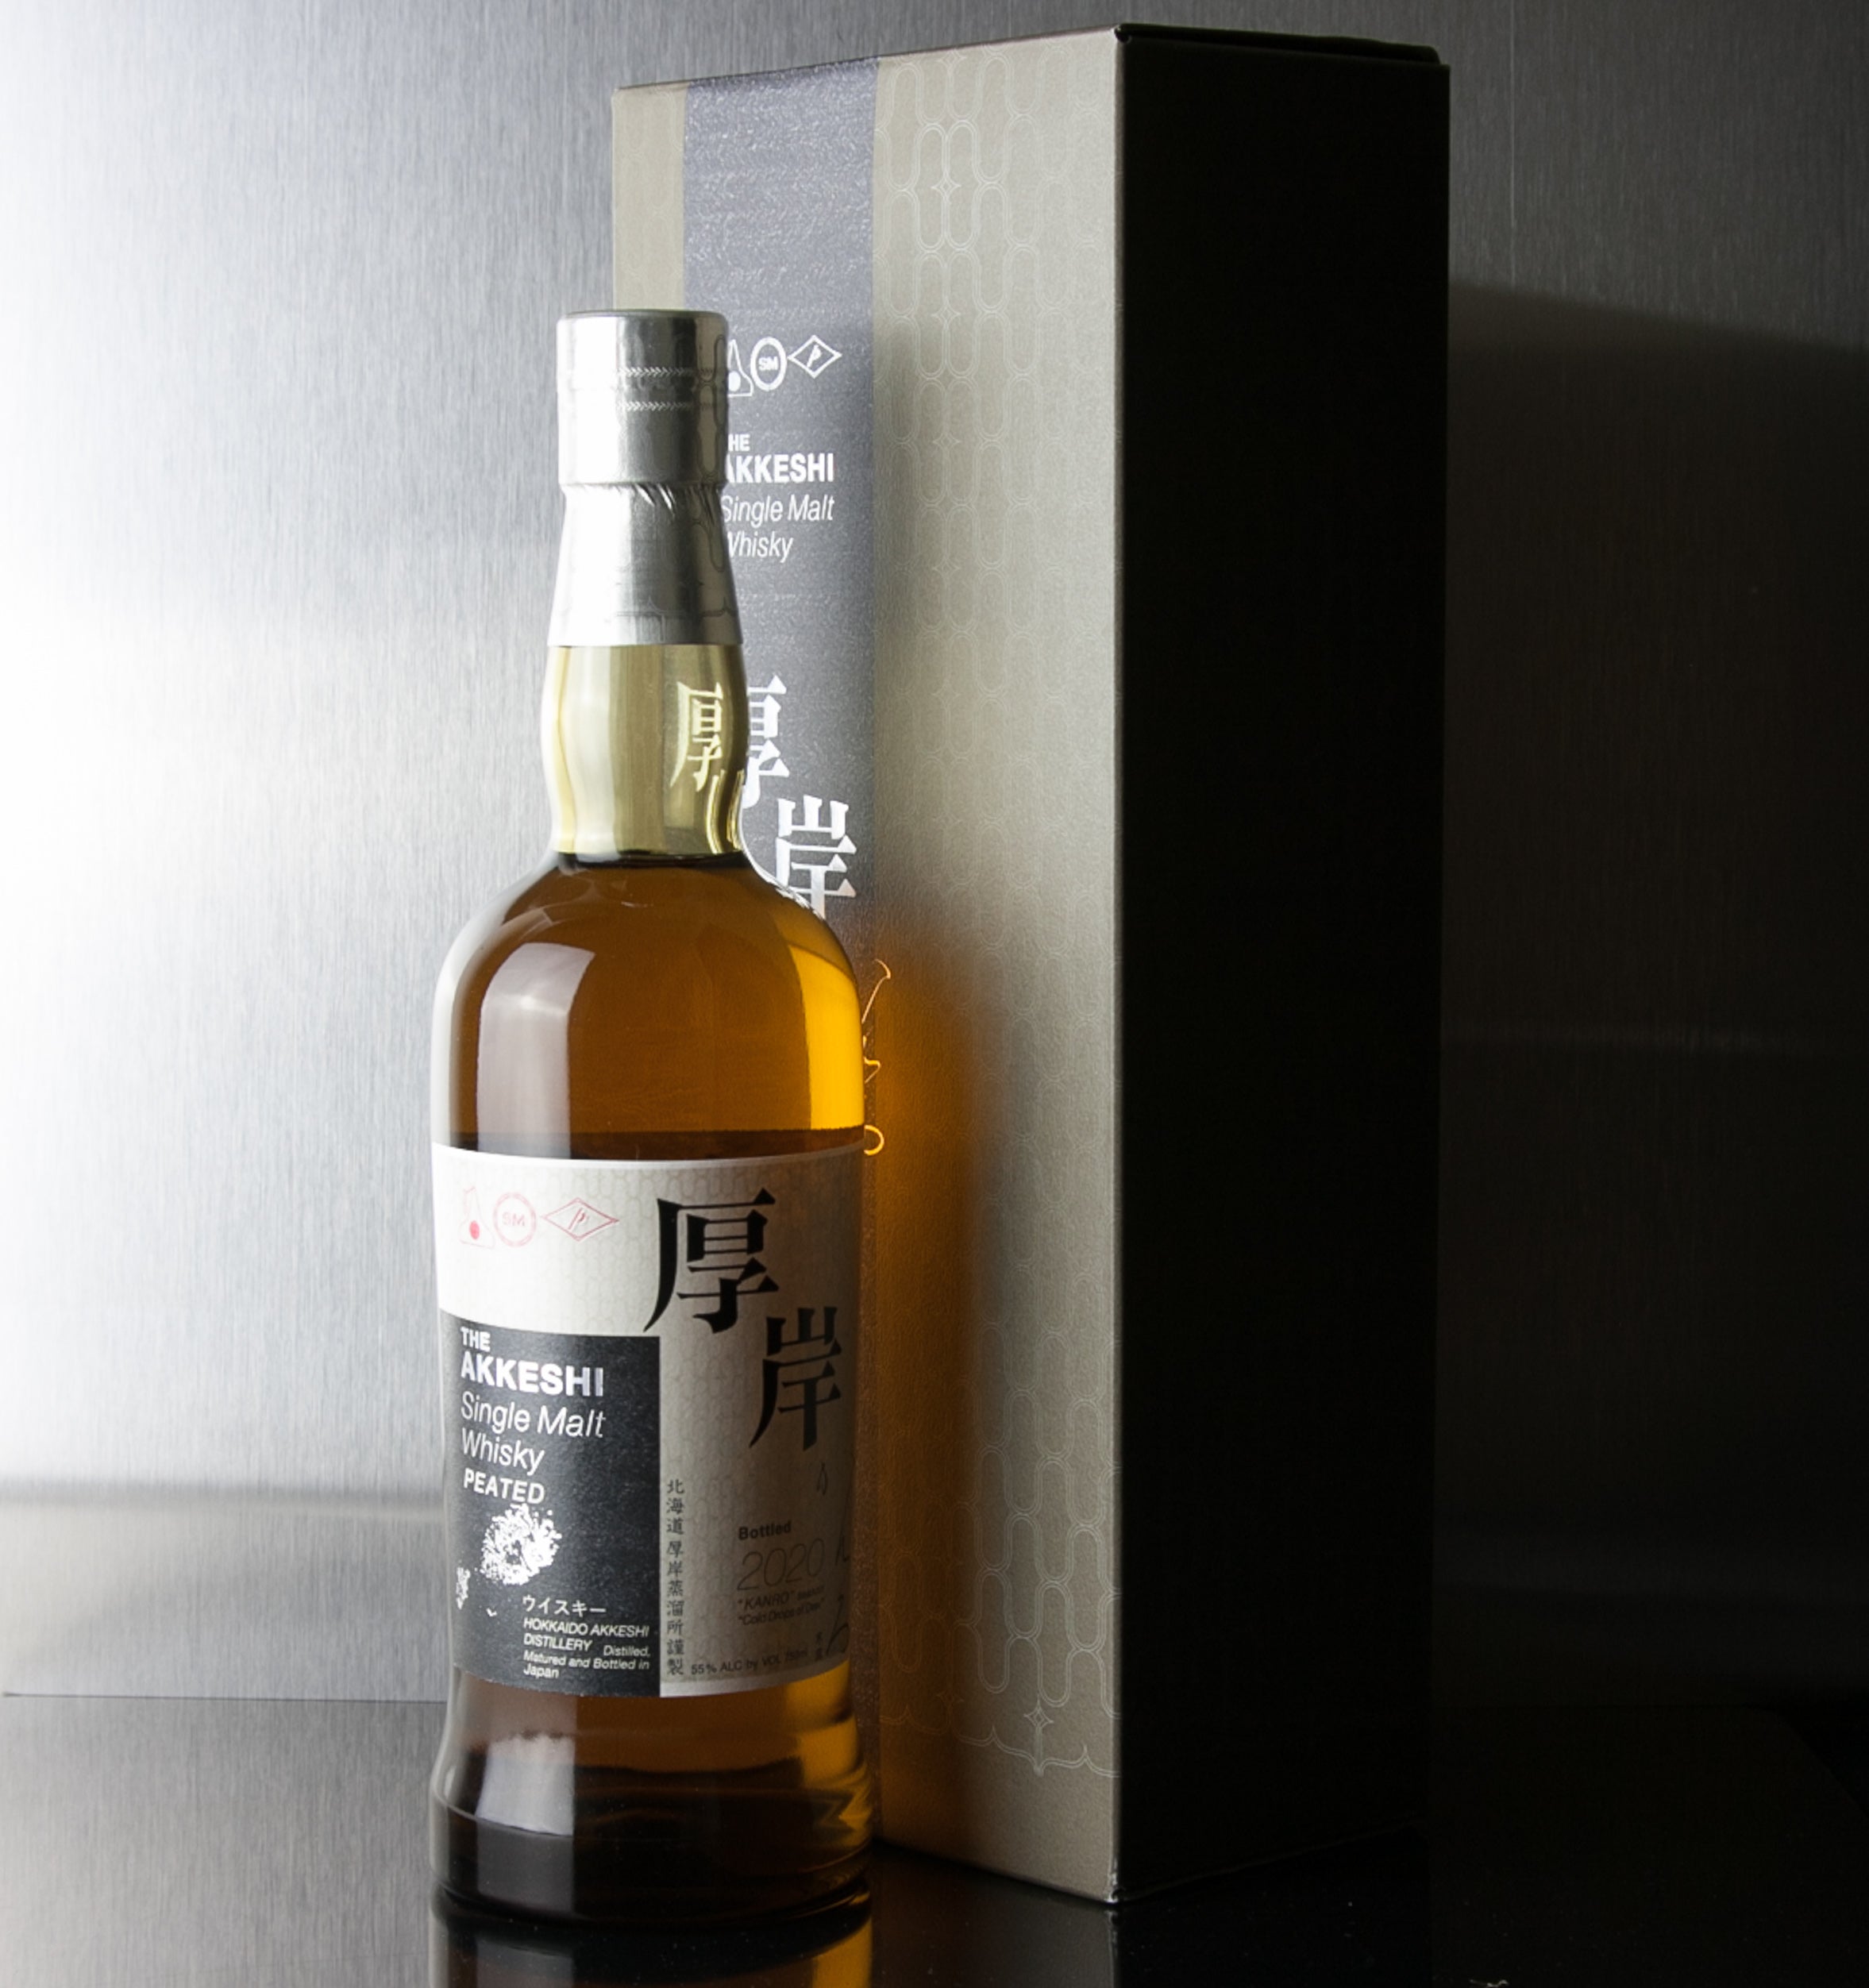 Akkeshi Kenro Whisky